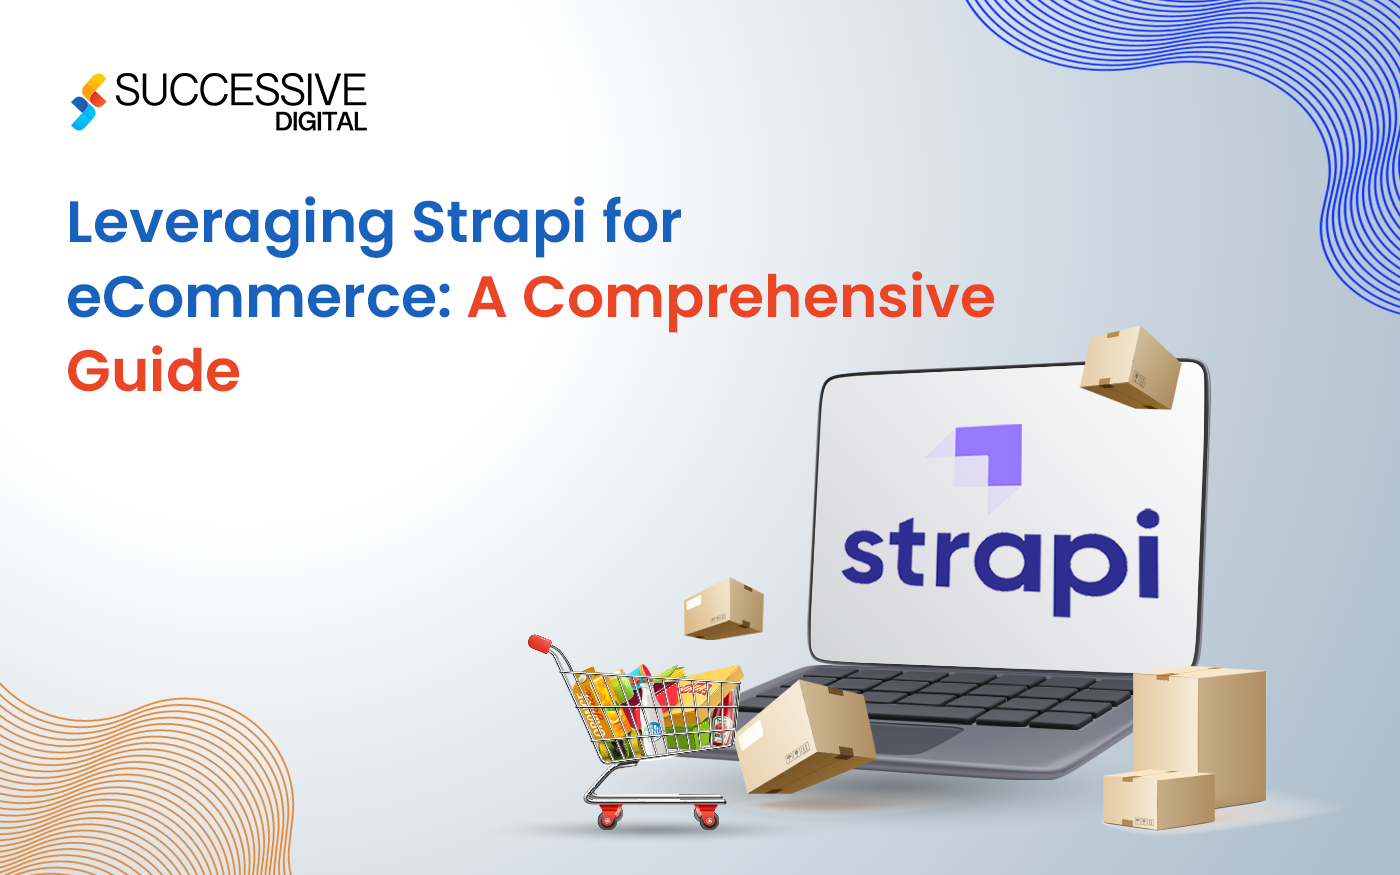 Leveraging Strapi for eCommerce Development: A Comprehensive Guide